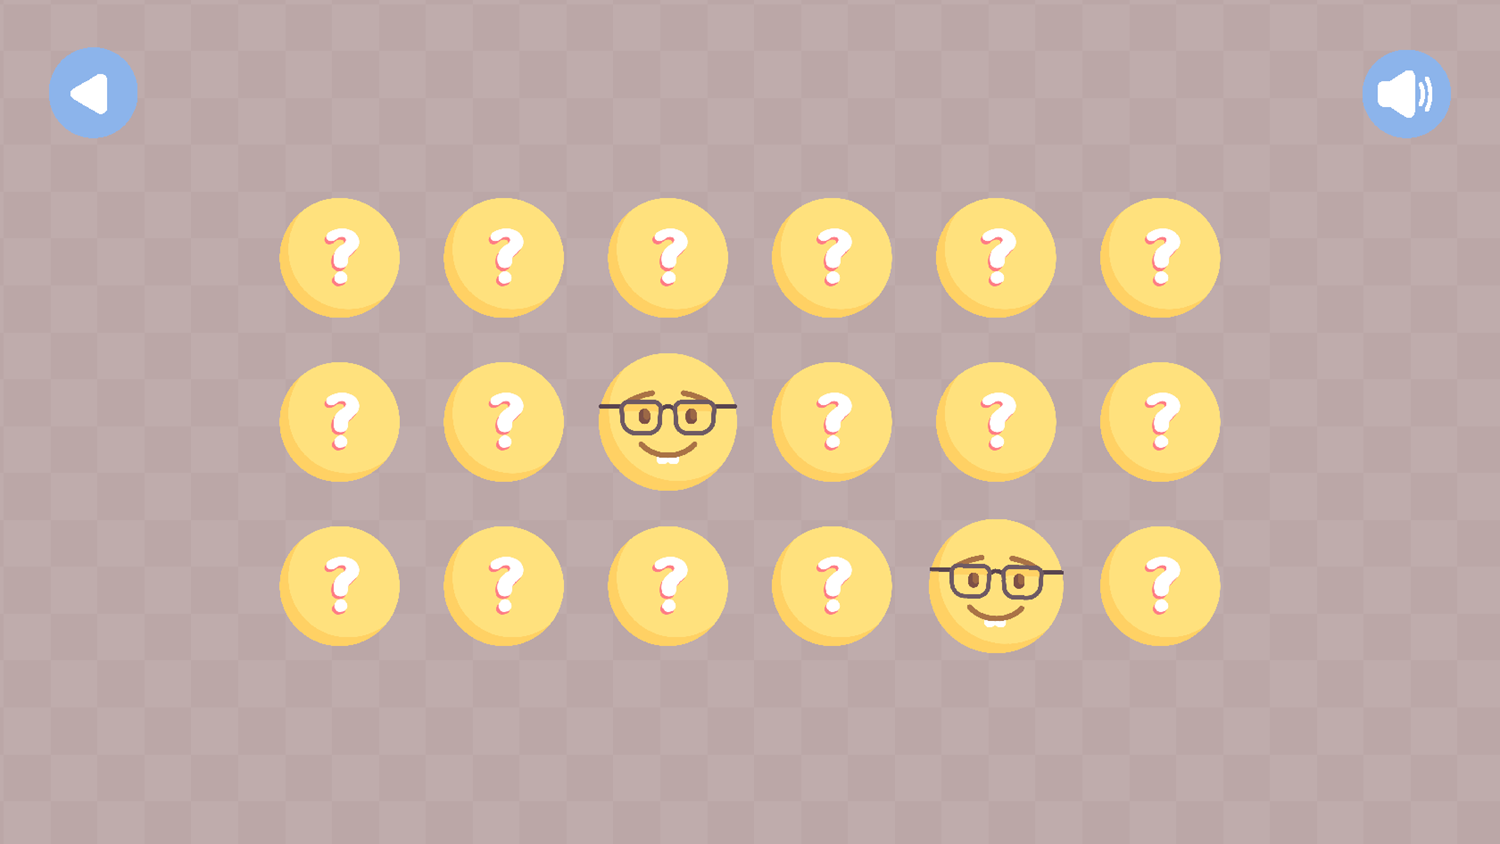 Memory Emoji Game Level Progress Screenshot.